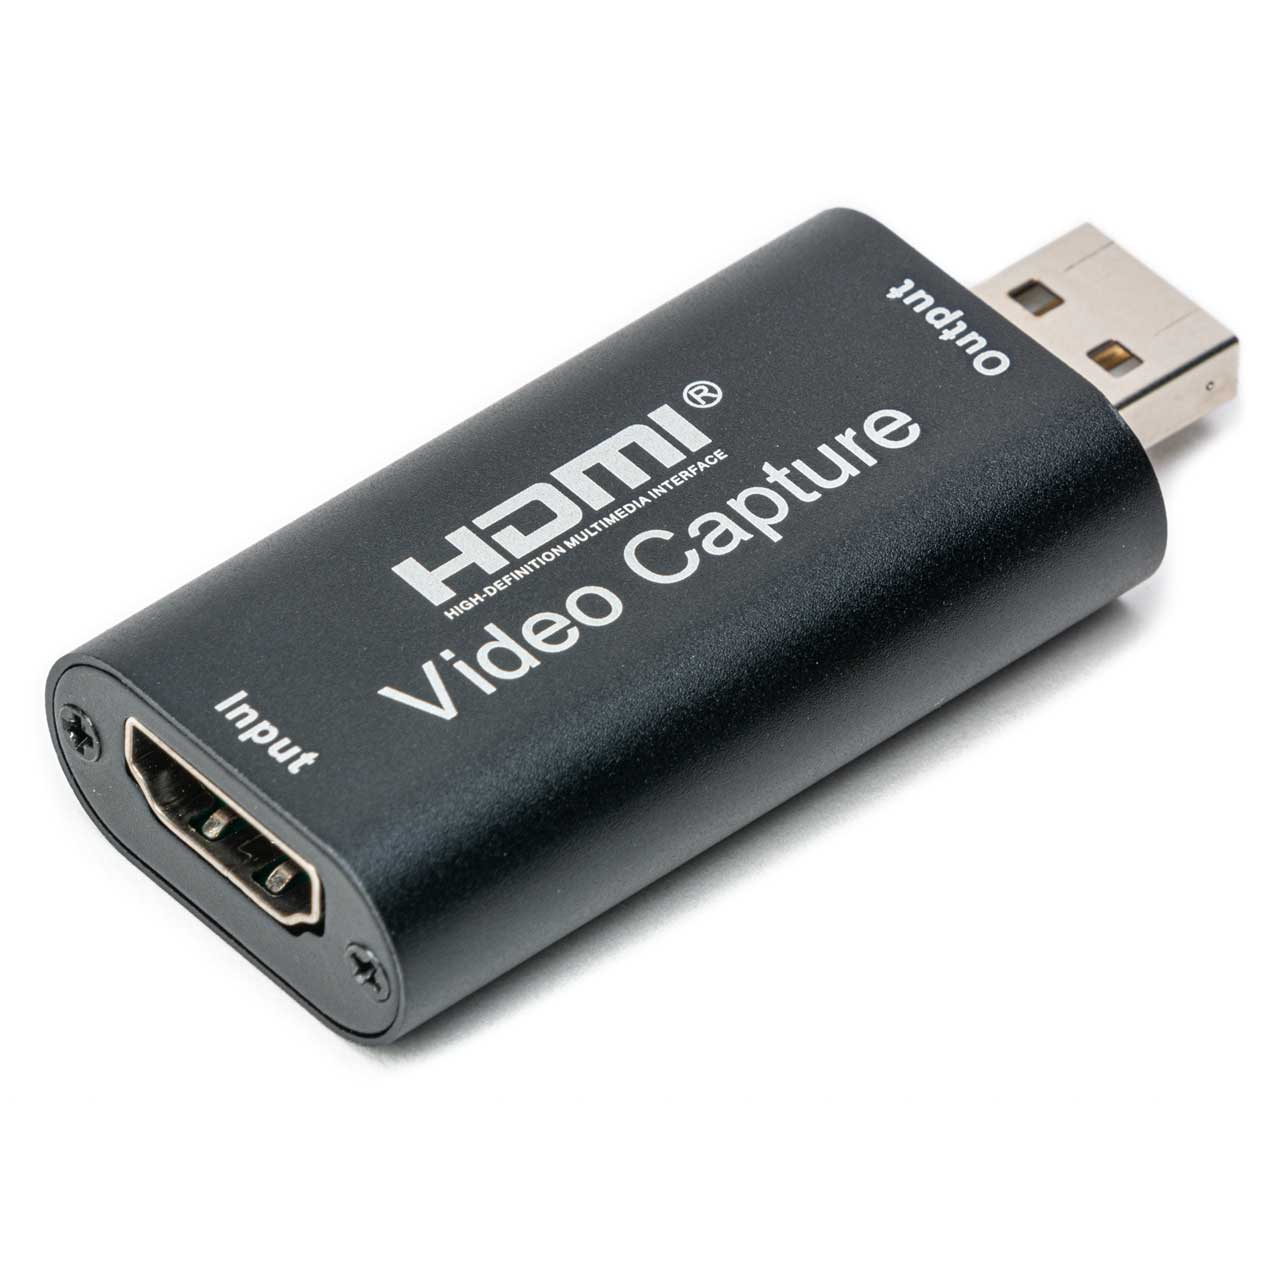 HDMI to USB HDMI Video Capture Card - PiShop.us